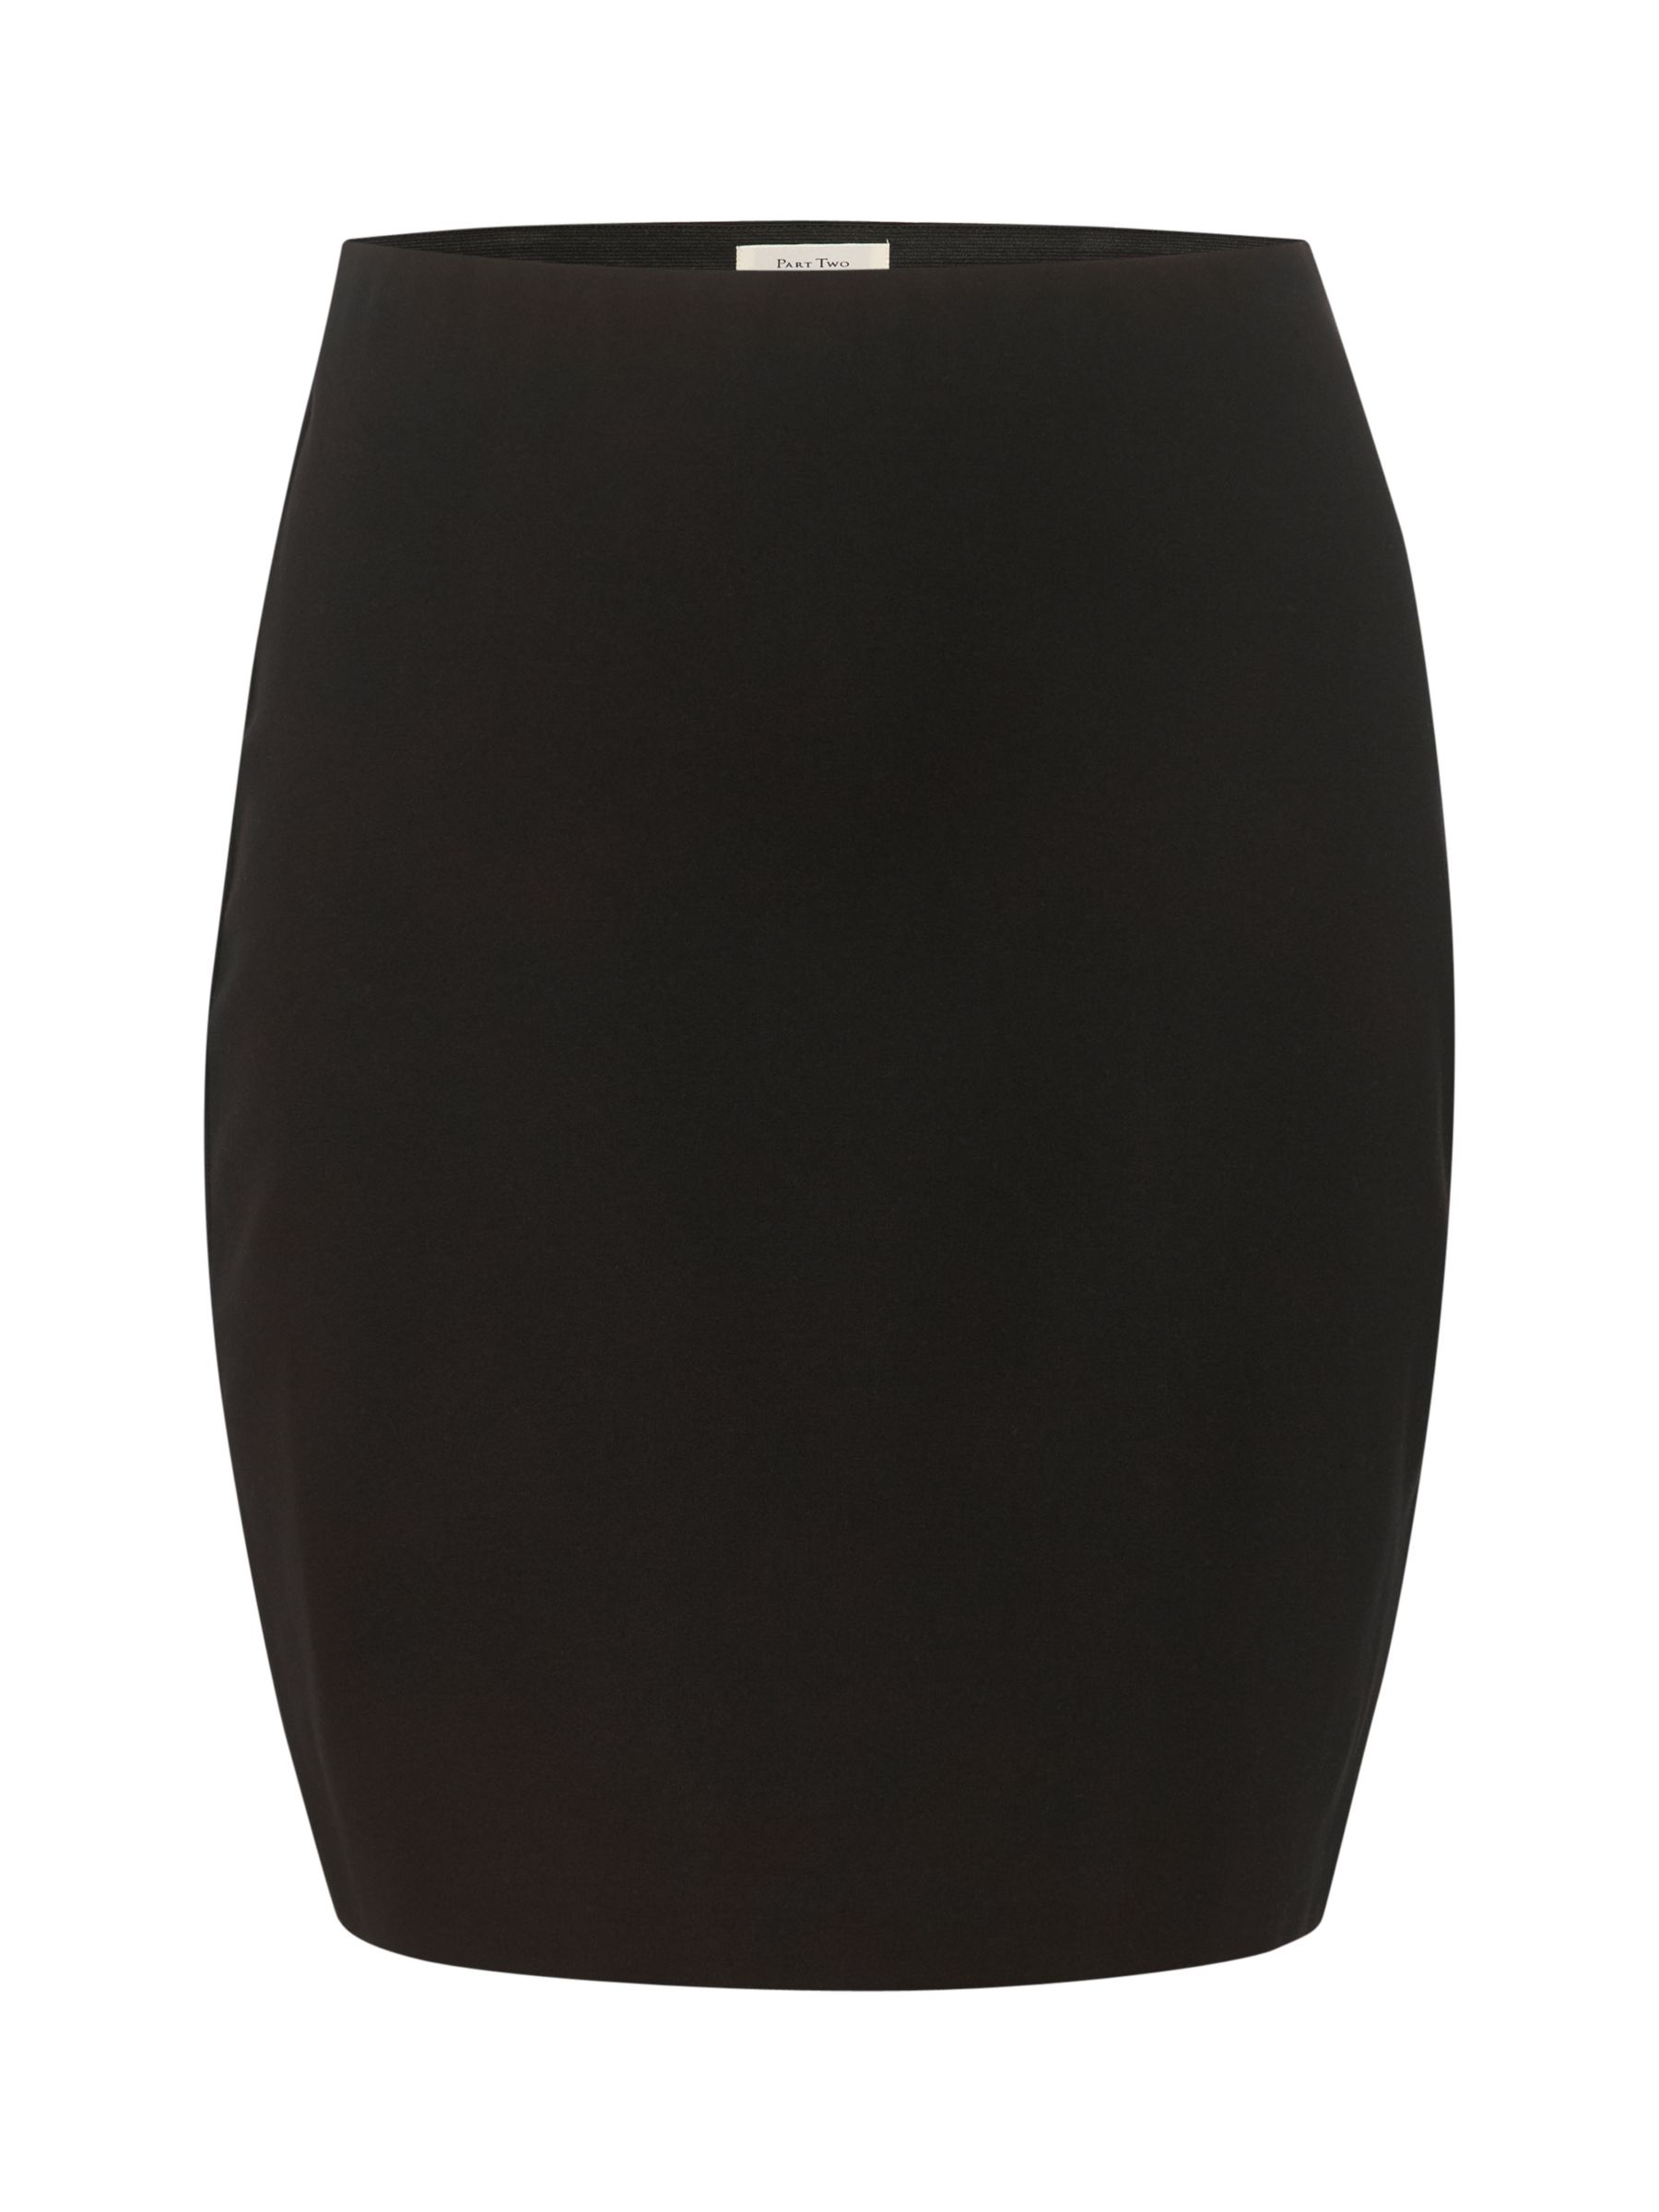 Buy Part Two Corinne Pencil Skirt, Black Online at johnlewis.com